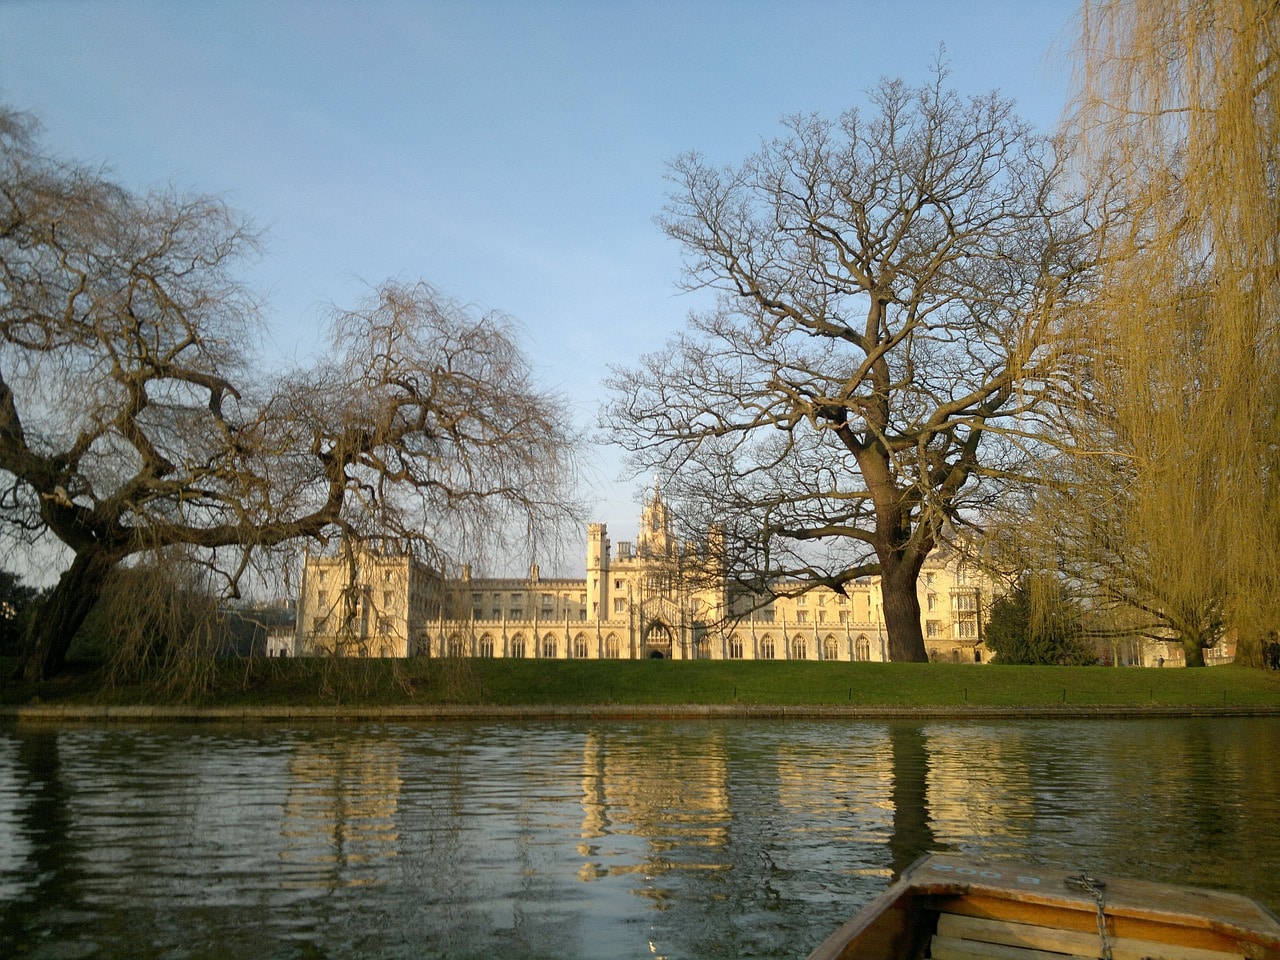 St. Johns College in Cambridge